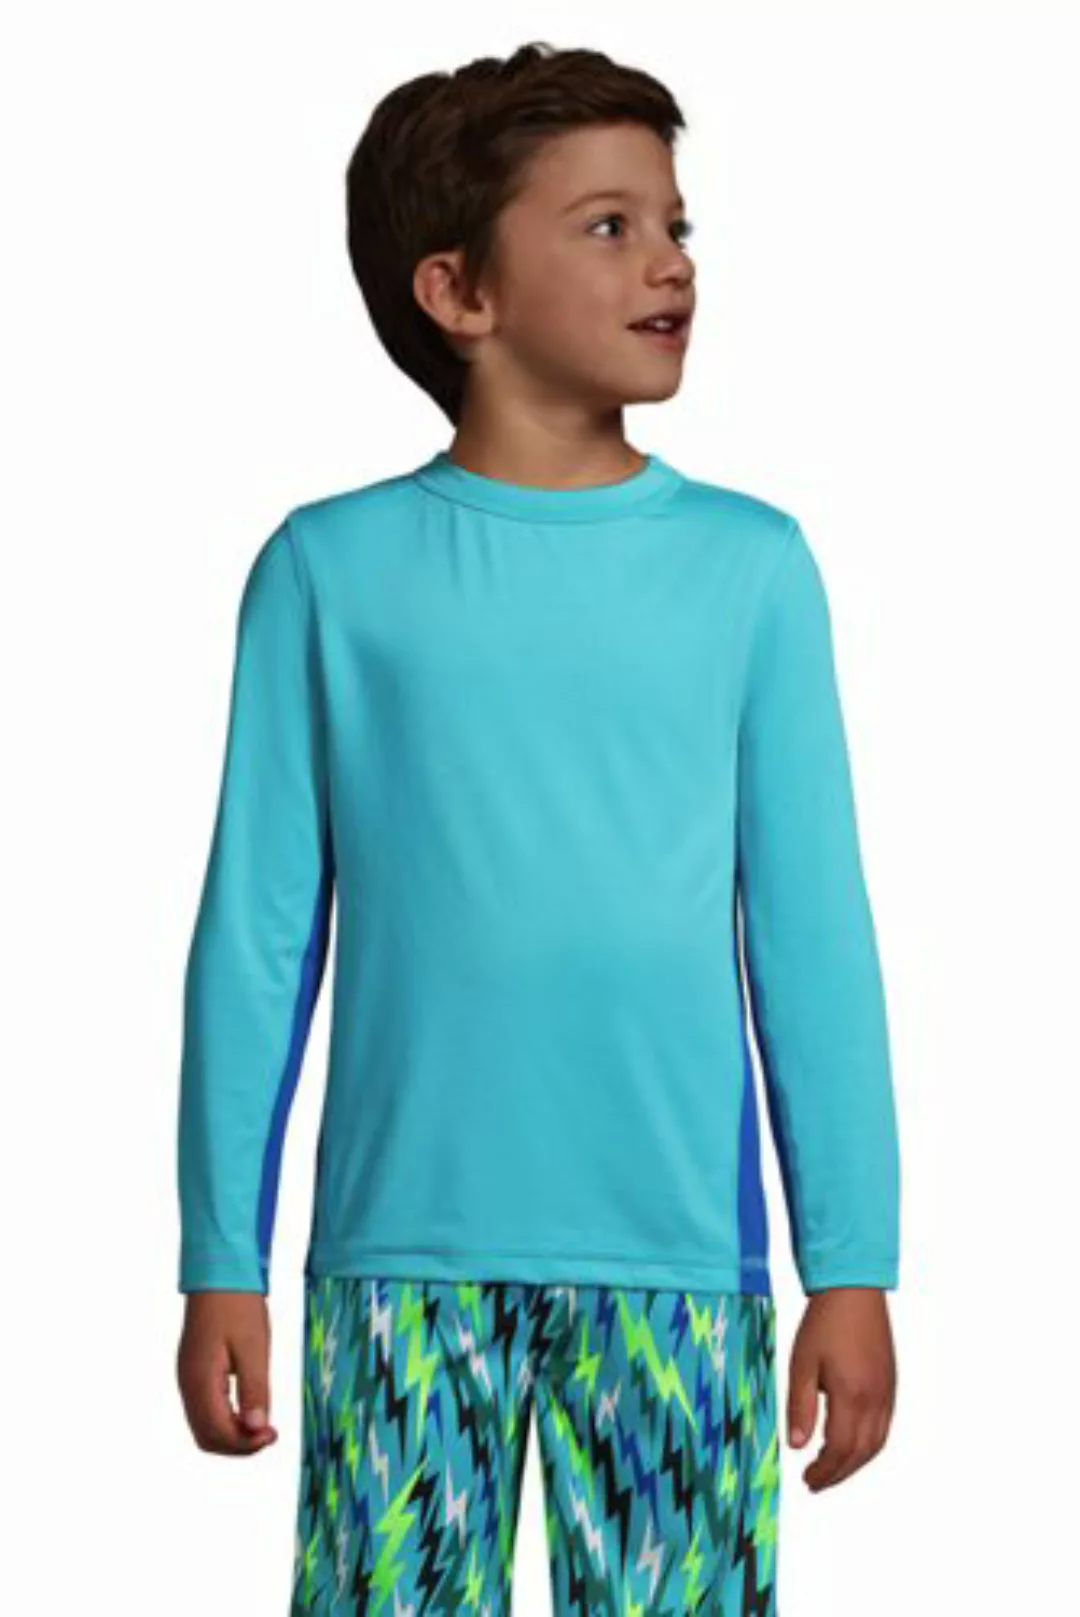 ACTIVE Langarm-Shirt, Größe: 134-152, Blau, Elasthan, by Lands' End, Scuba günstig online kaufen